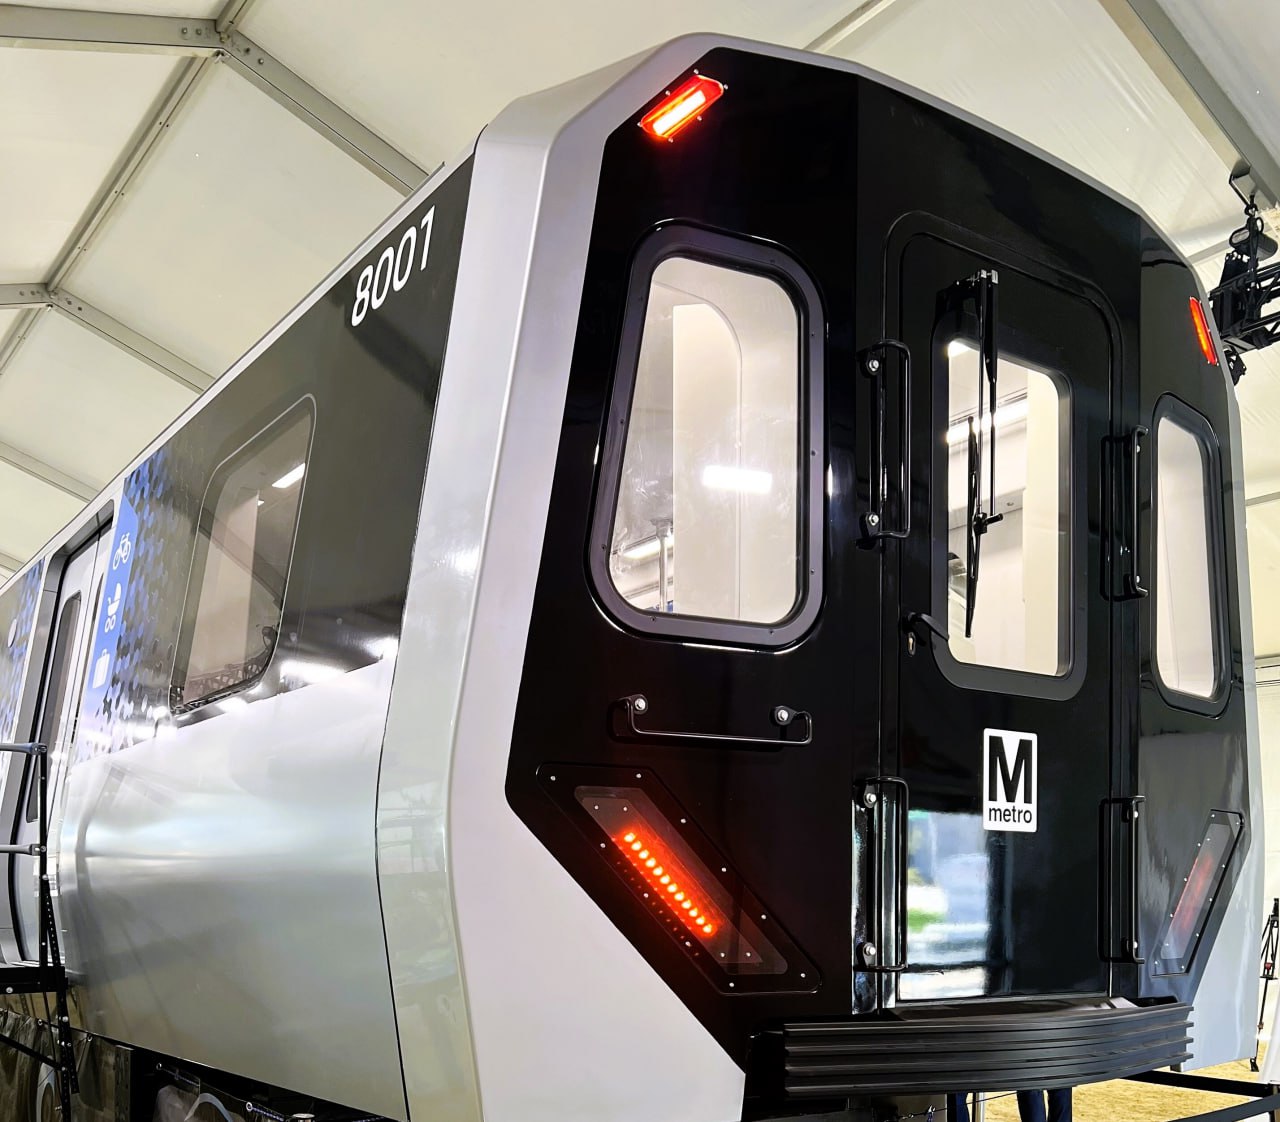 Mockup of the 8000 Hitachi Rail metro car for the Washington Metro